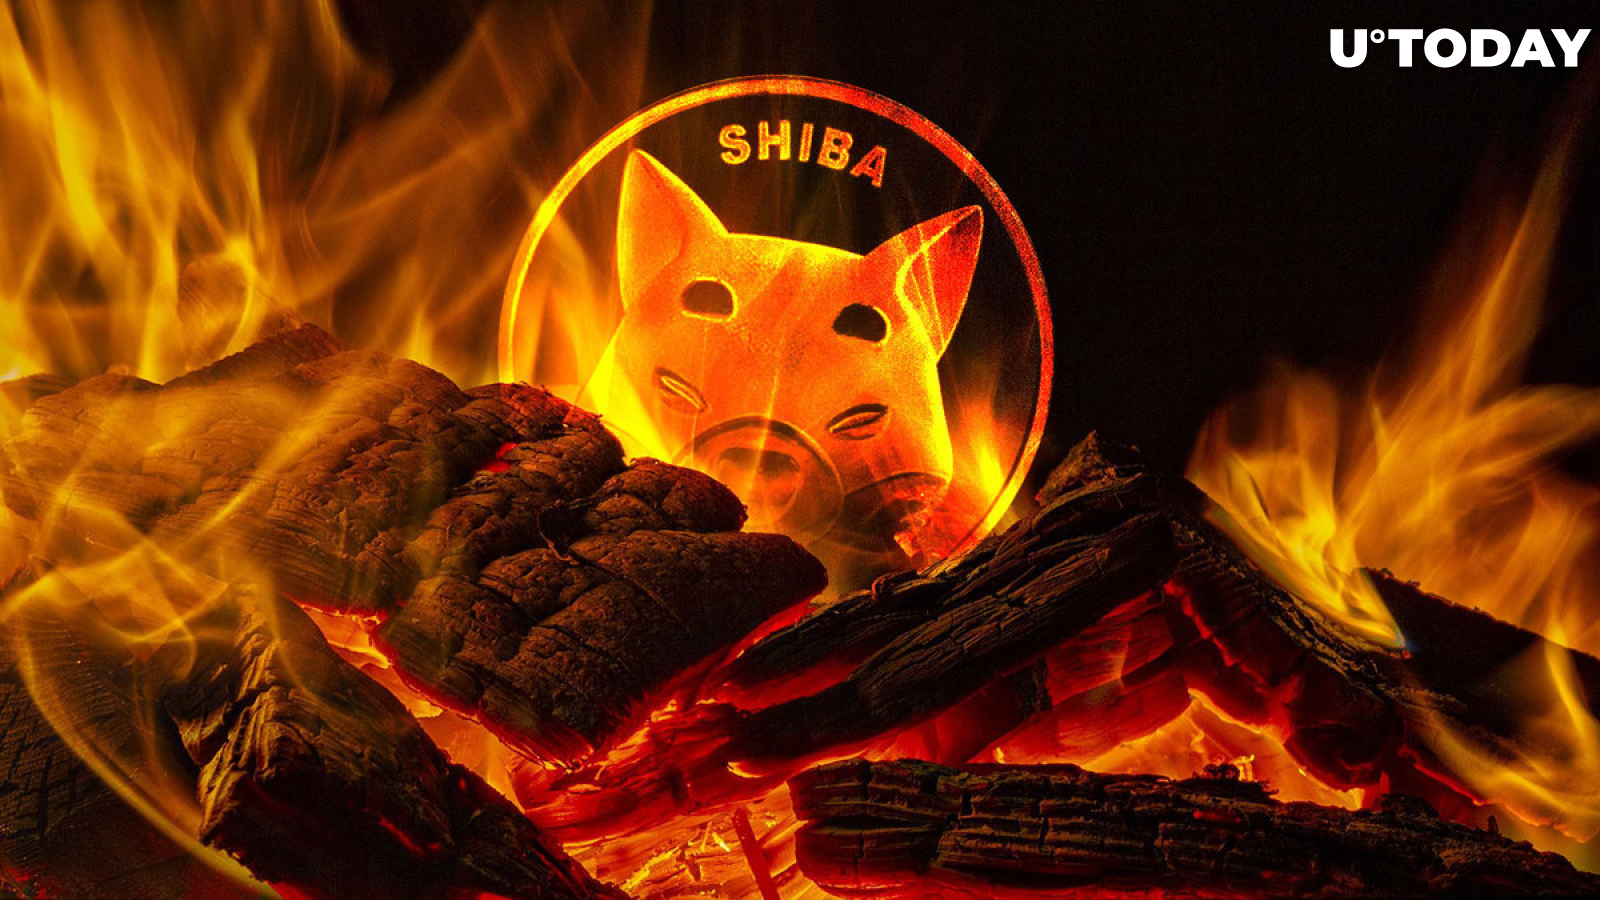 Dormant SHIB Wallet Awakens to Help Burn 113 Million Shiba Inu: Details